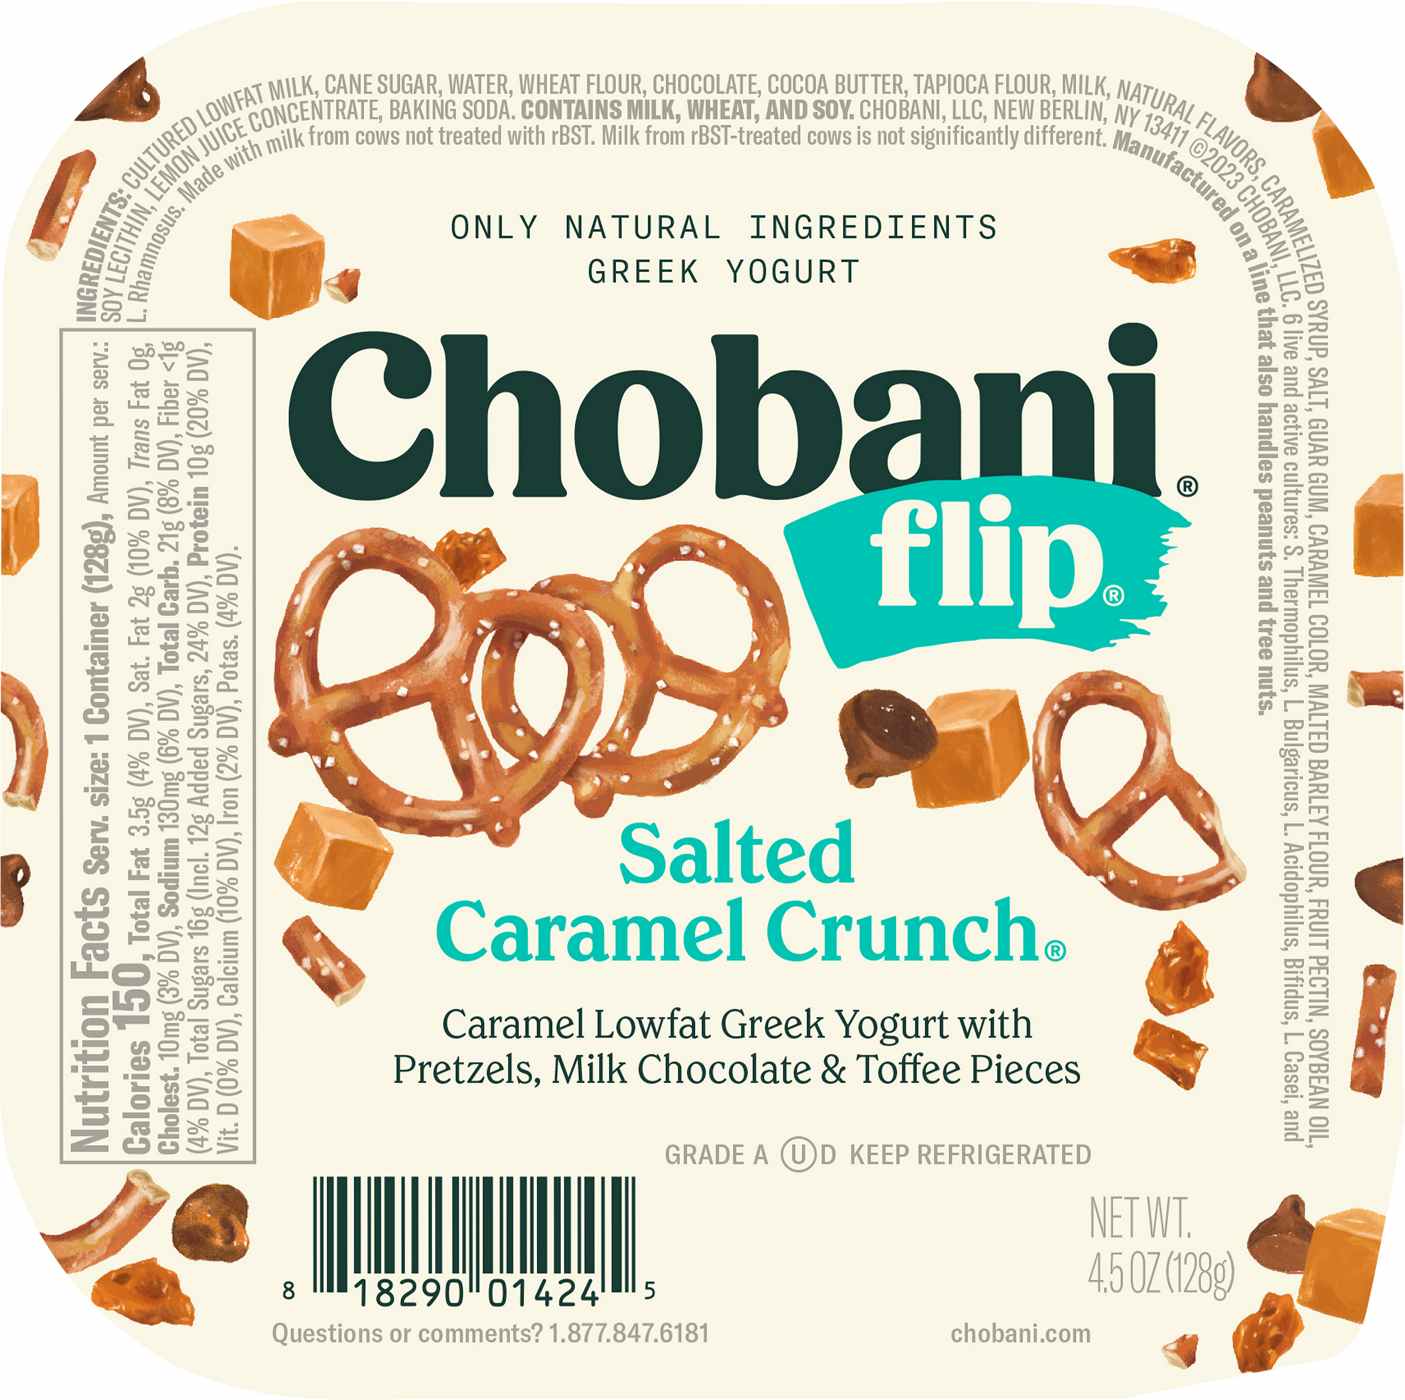 Chobani Flip Low-Fat Salted Caramel Crunch Greek Yogurt; image 2 of 2